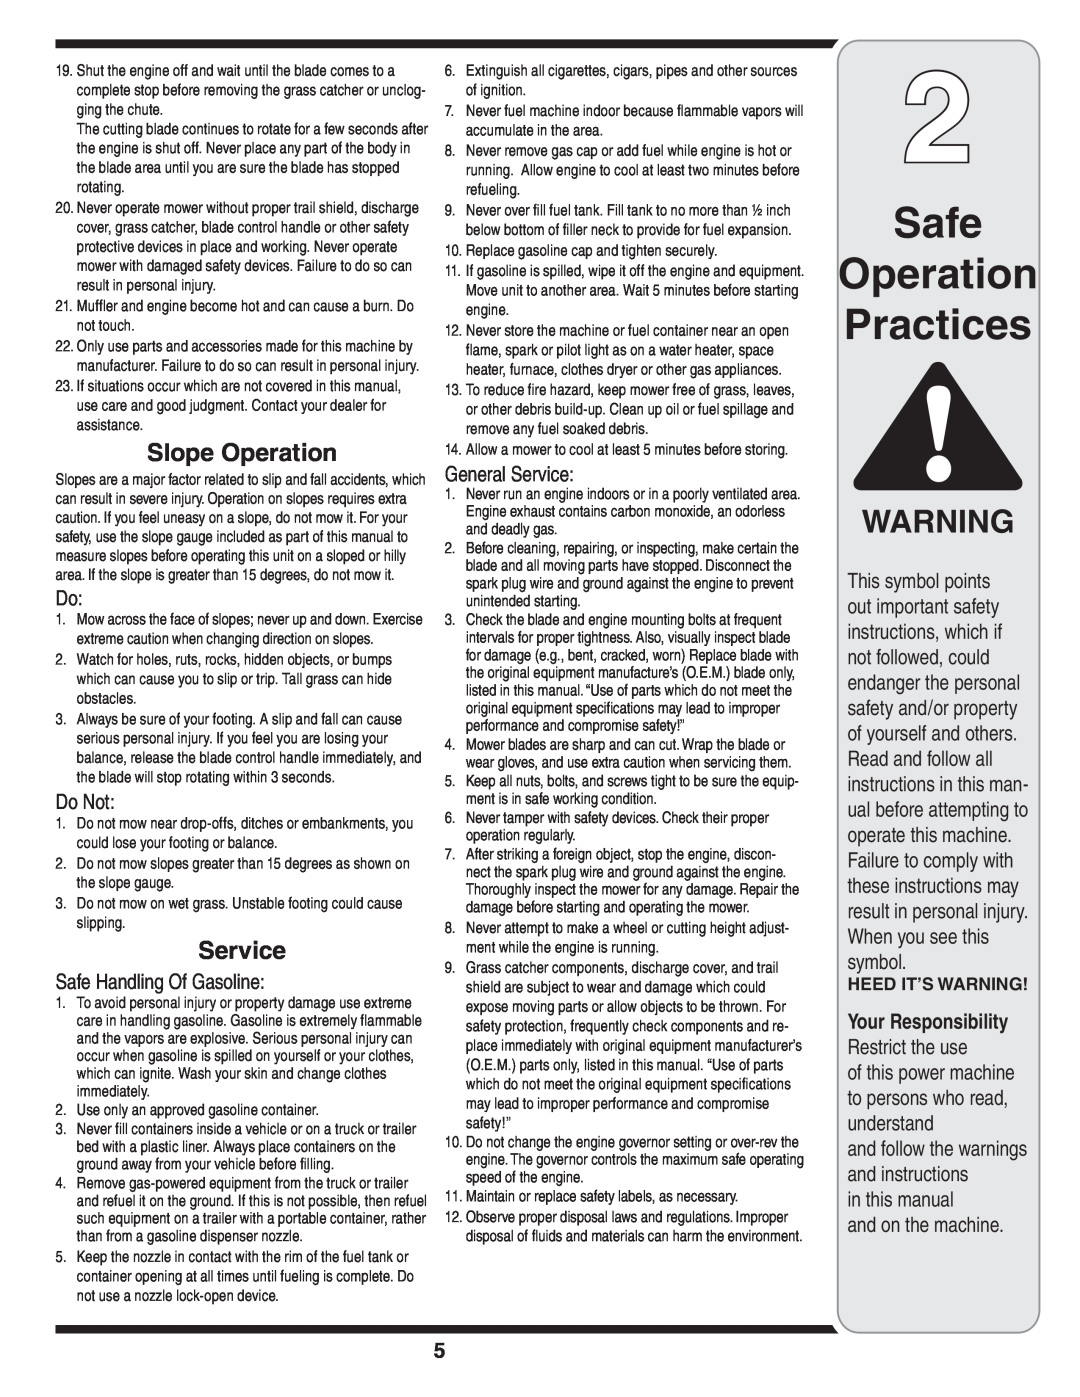 MTD 80 Safe Operation Practices, Slope Operation, Do Not, Safe Handling Of Gasoline, General Service, Restrict the use 